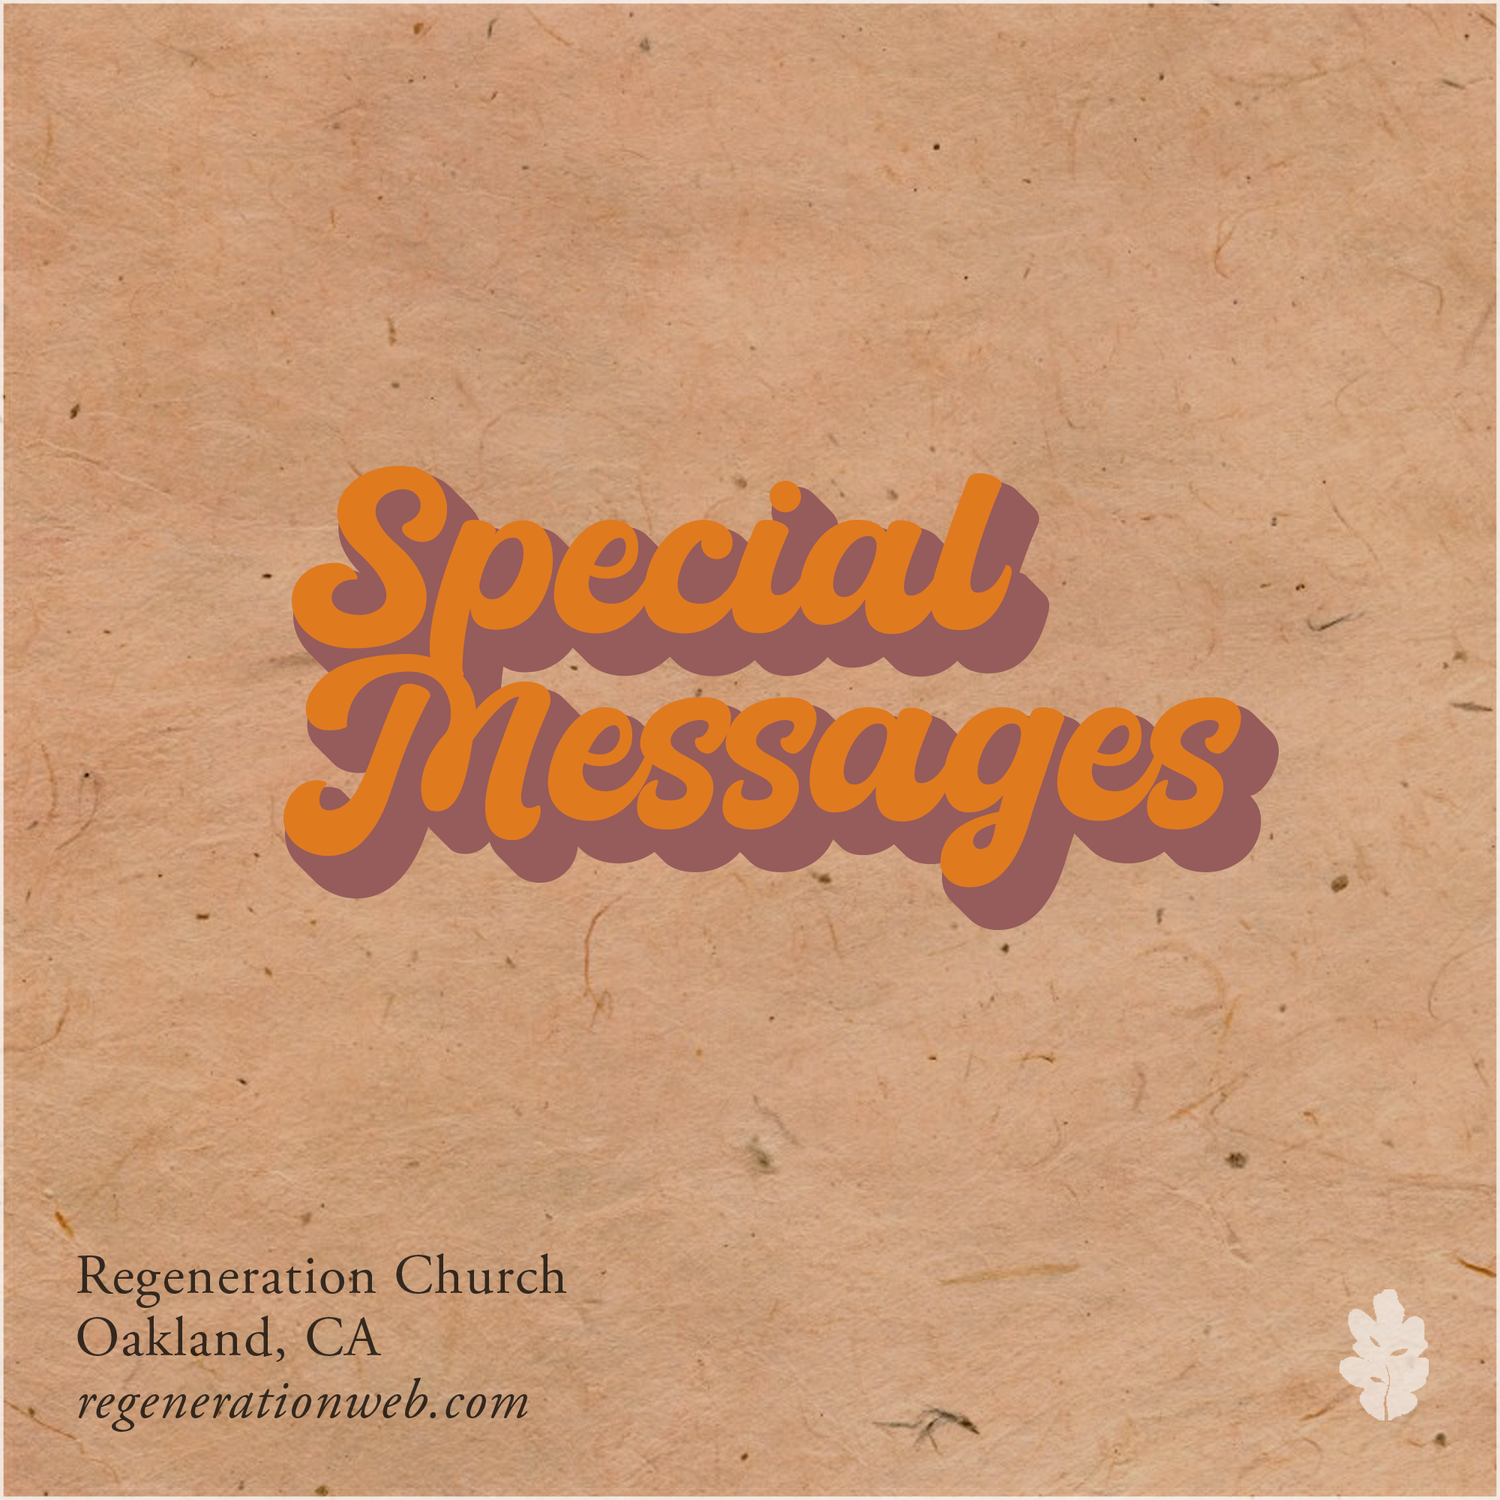 Special Messages - Regeneration Church